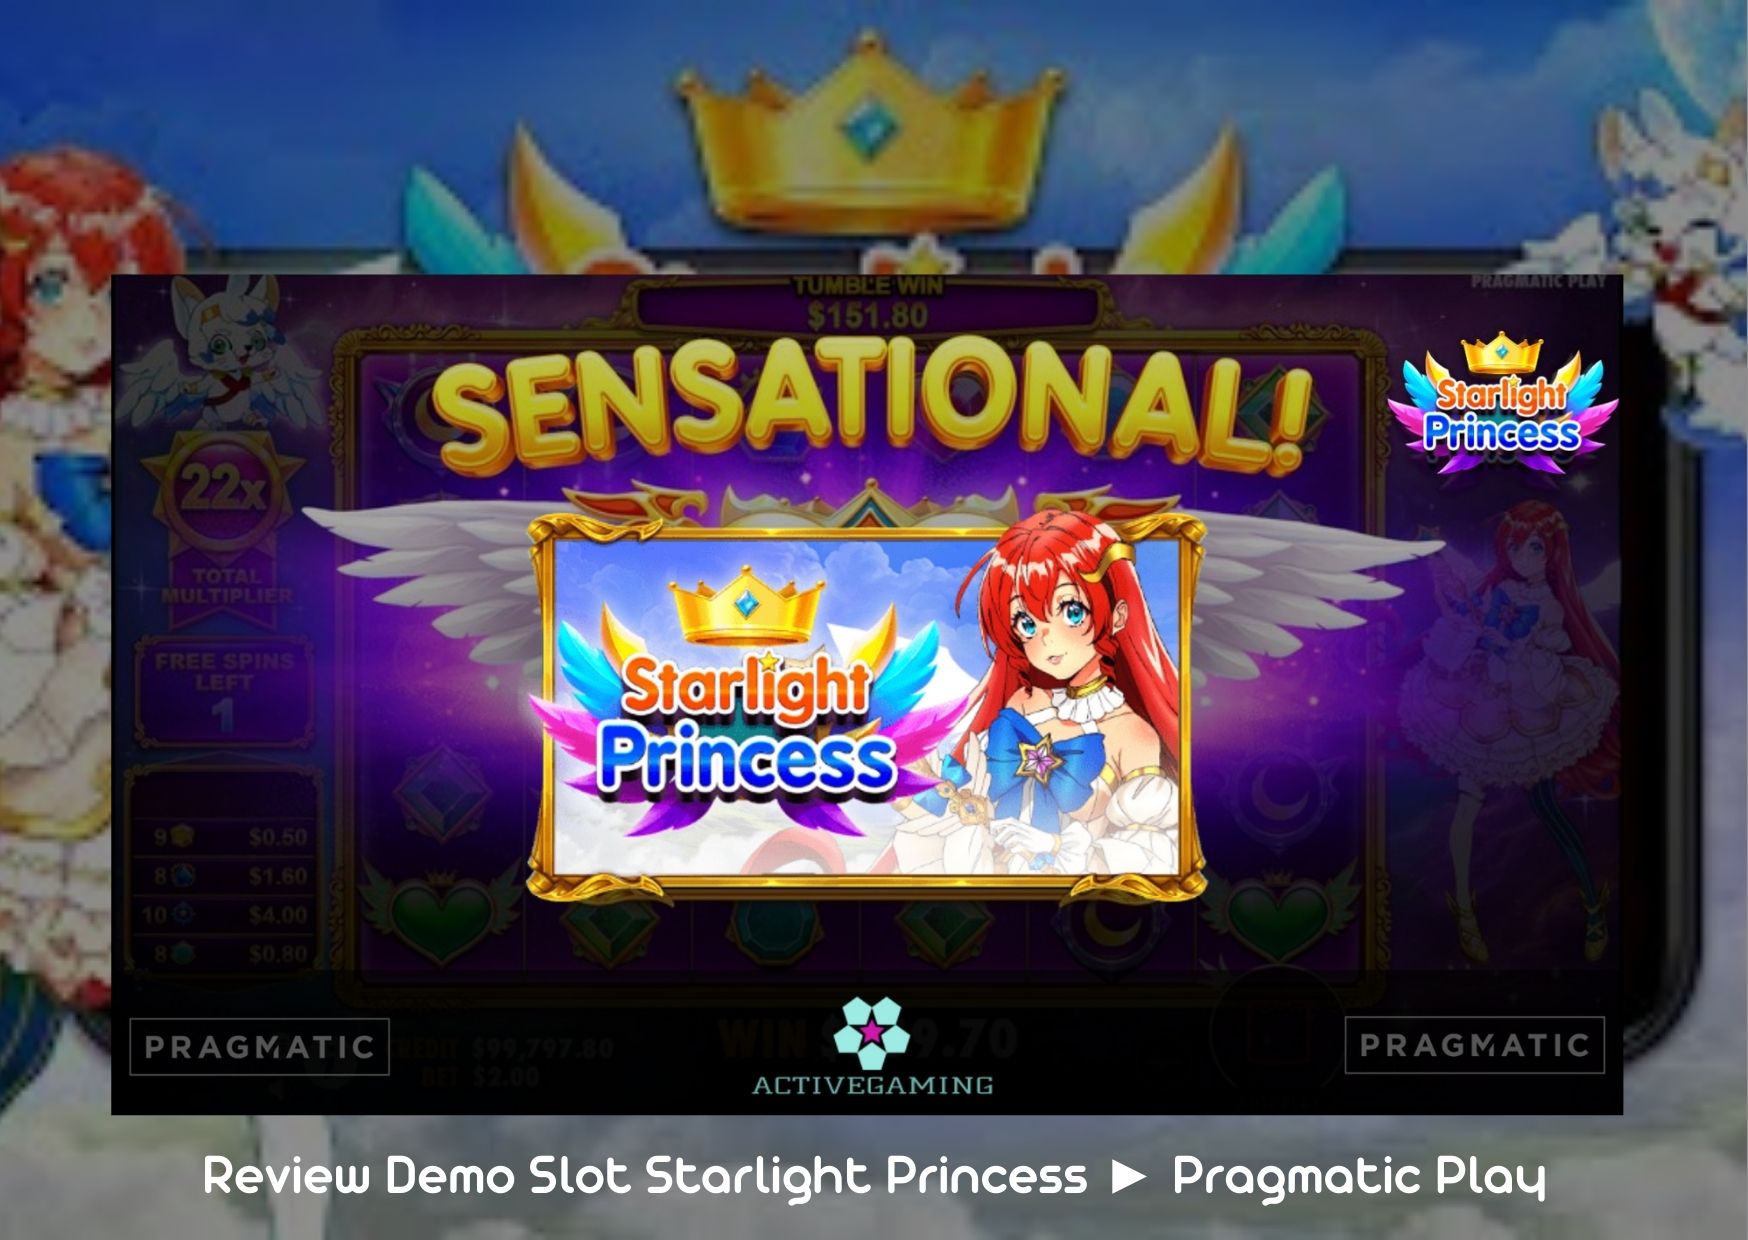 Review Demo Slot Starlight Princess ► Pragmatic Play